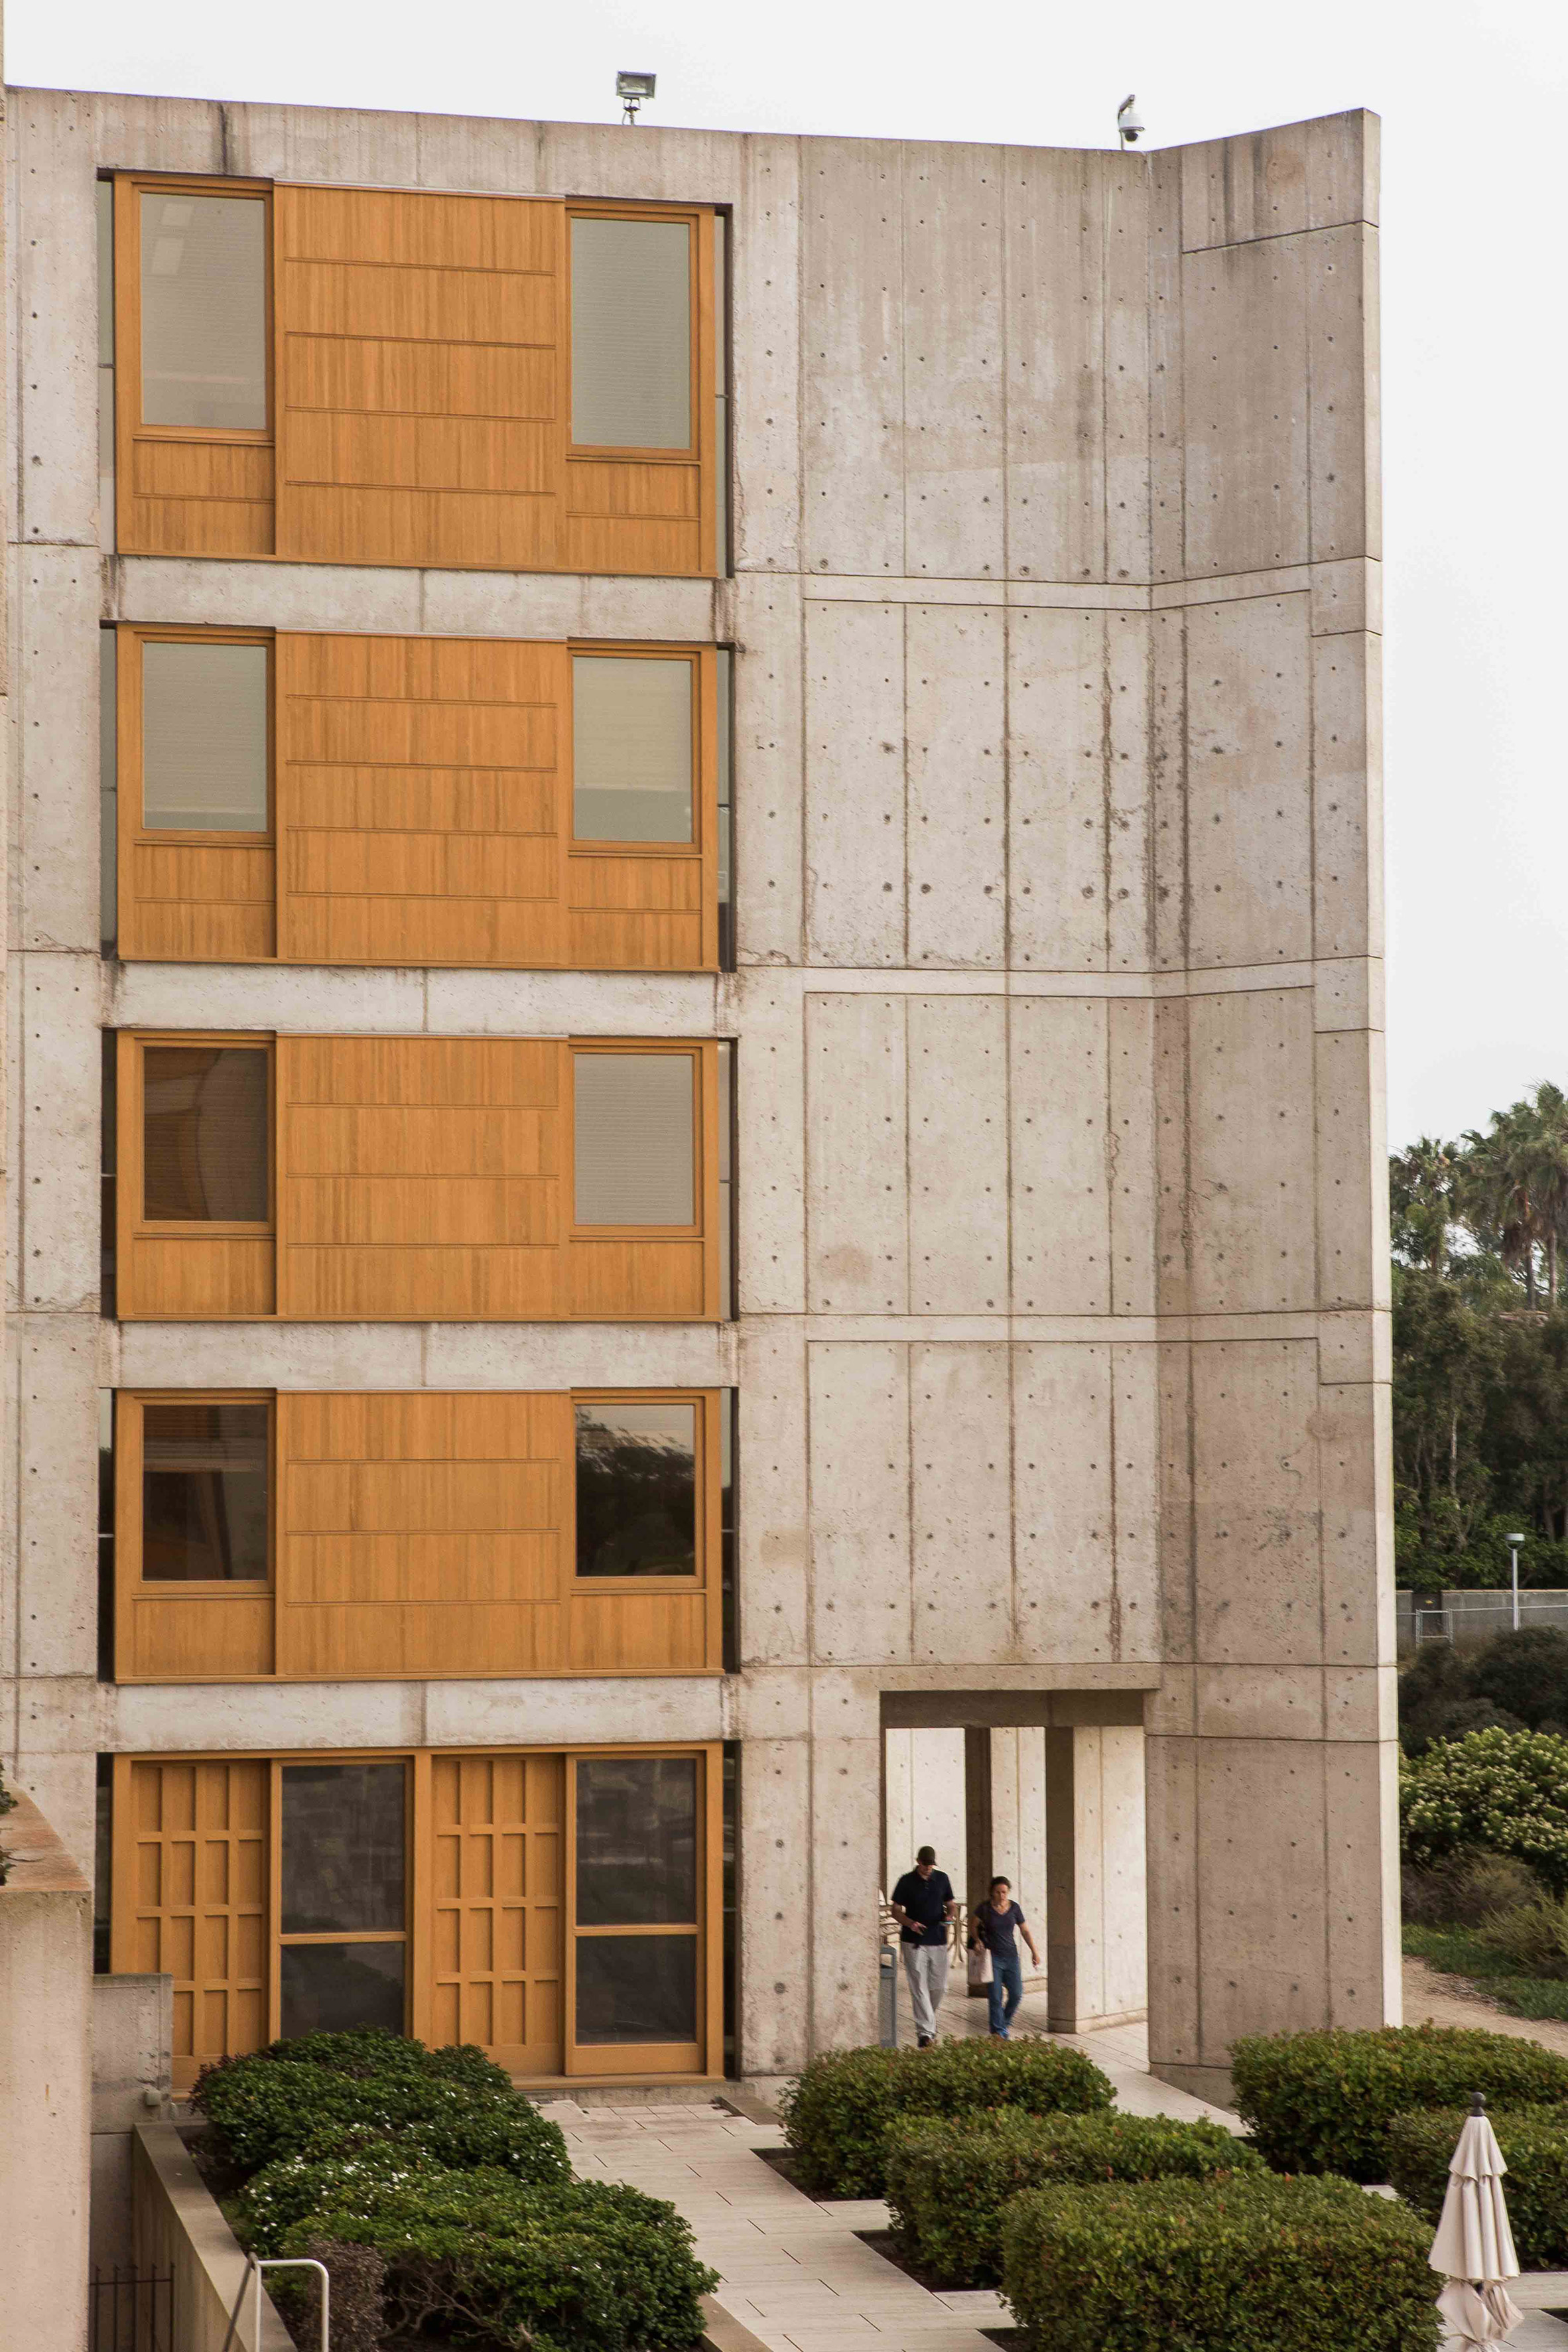 Restoration work completes on Louis Kahn's Salk Institute in California